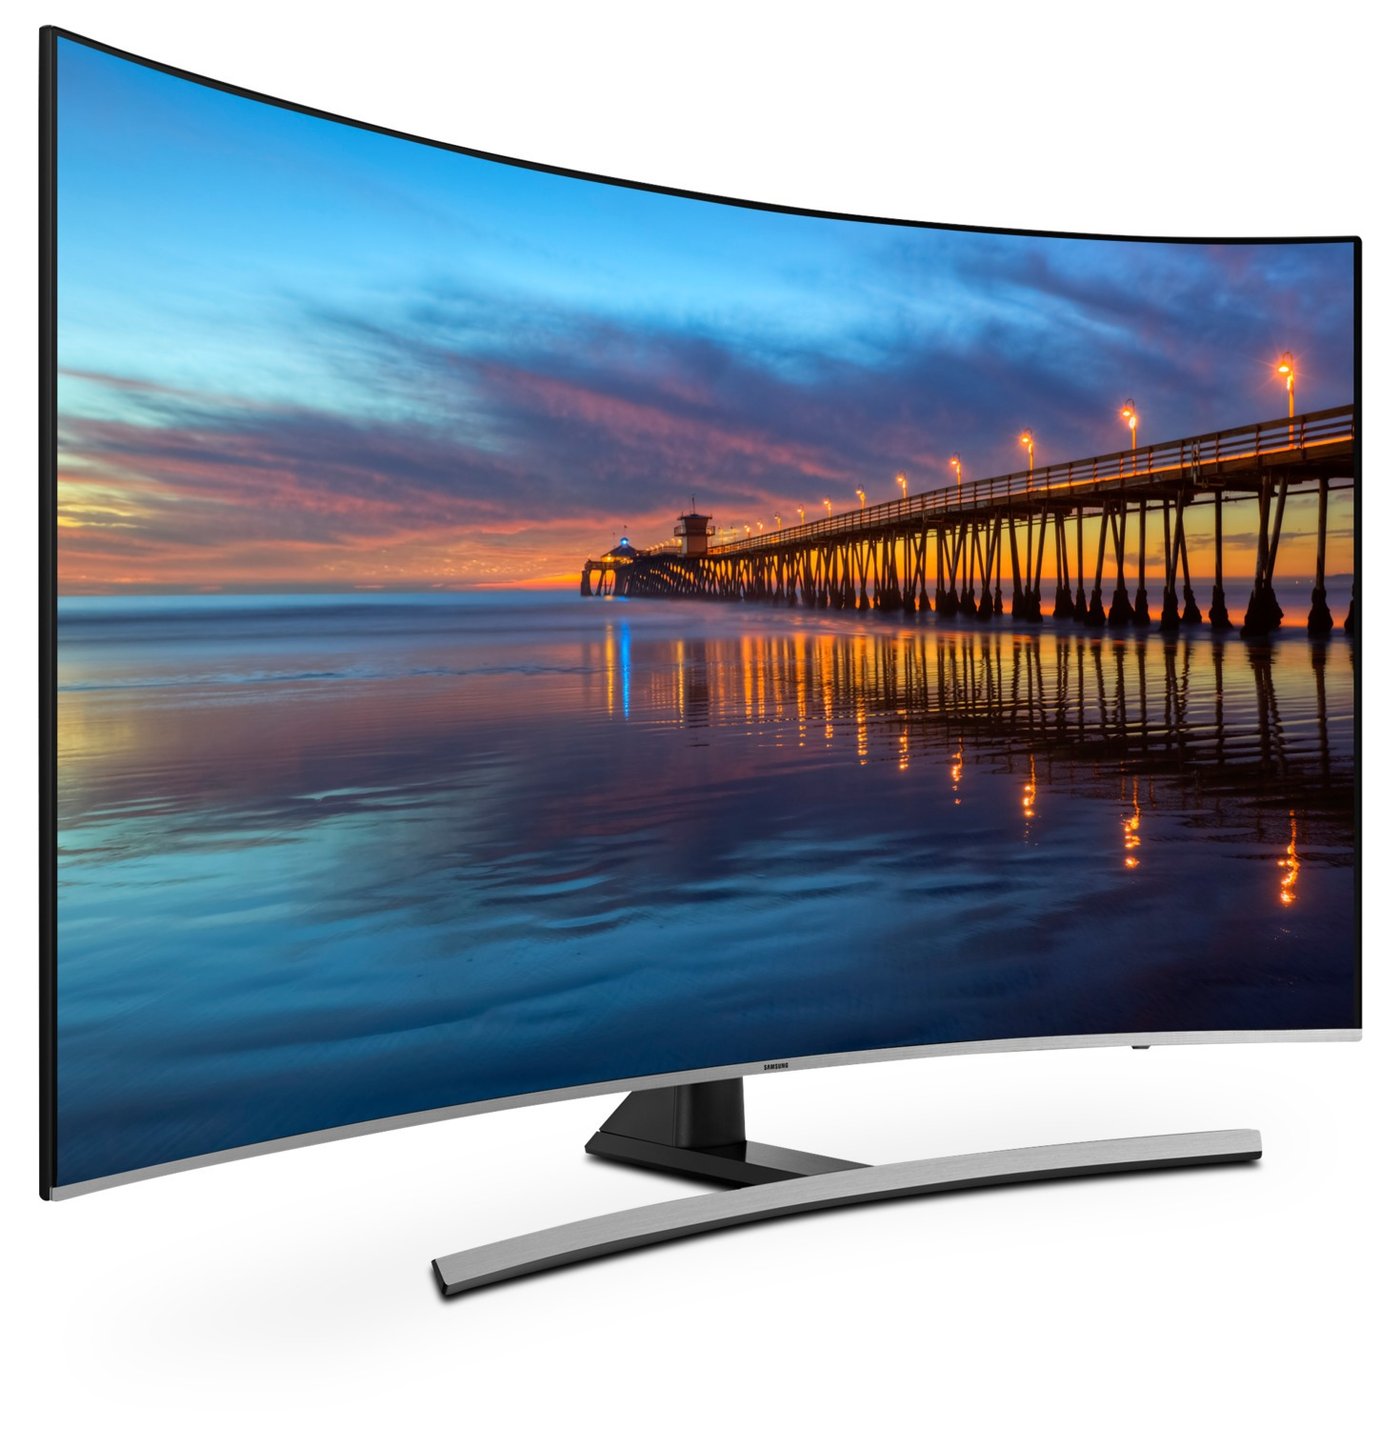 Купить телевизор смарт дешевле. Samsung 55ku6670. Samsung led 55. Телевизор самсунг (цена и функции). ТВ самсунг 138.